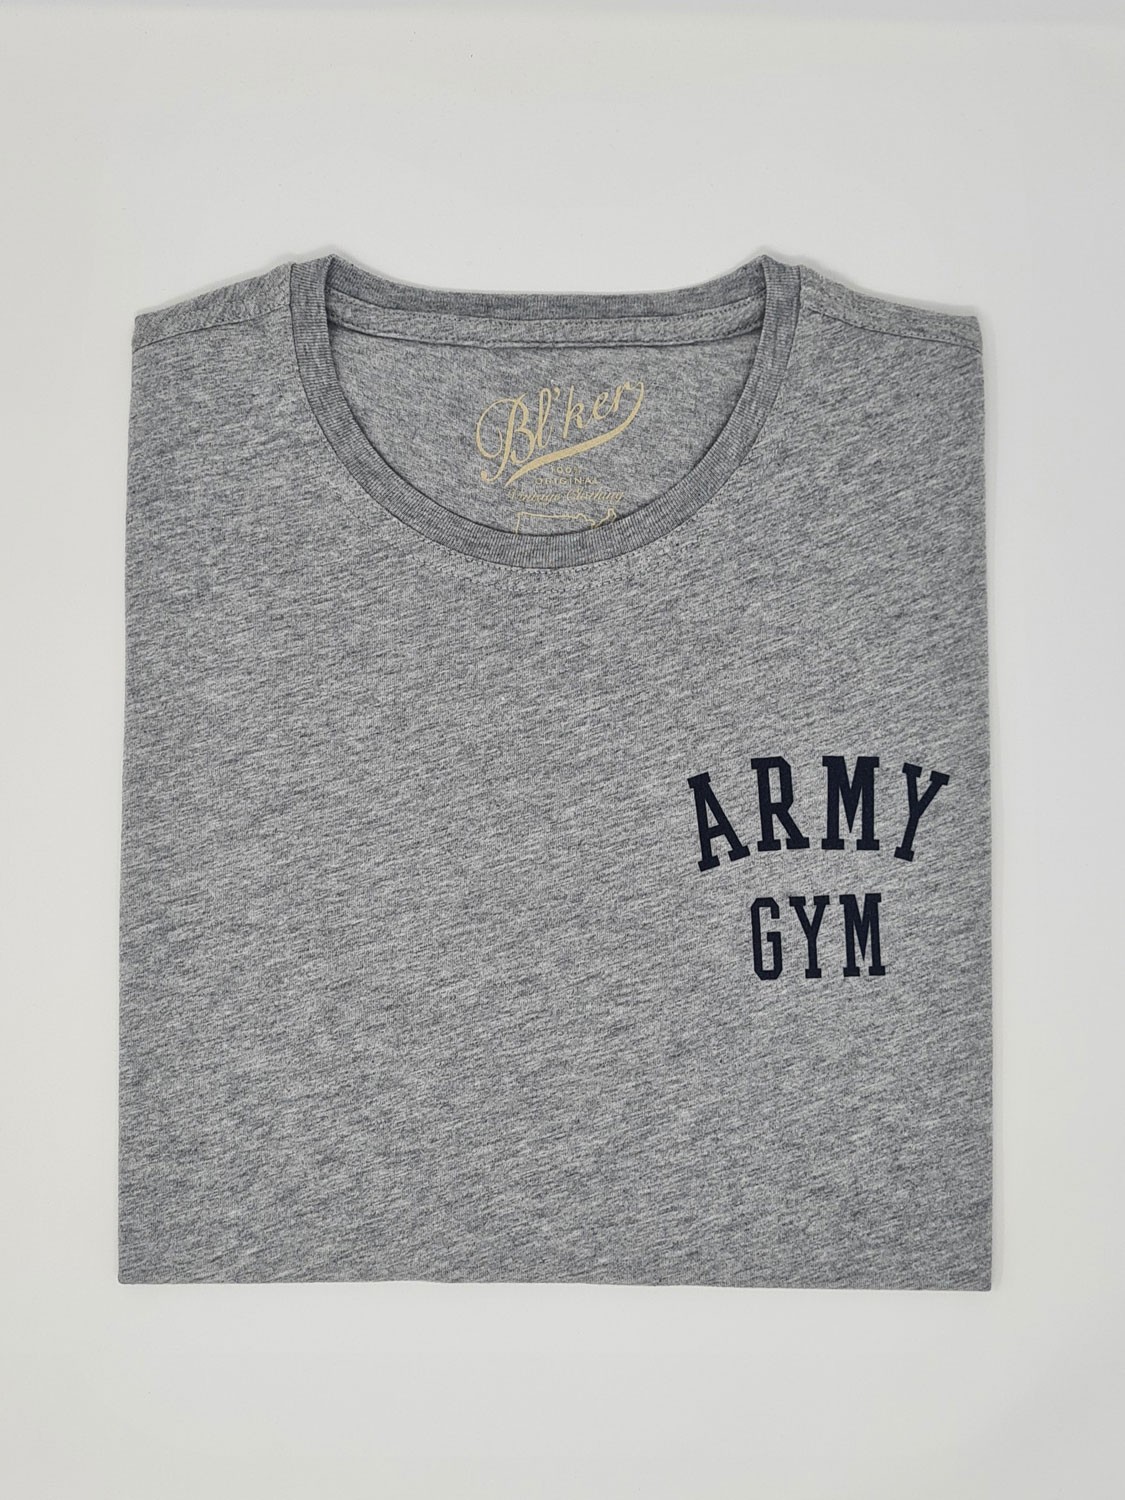 Bl'ker T-shirt Uomo Graphic Army Gym